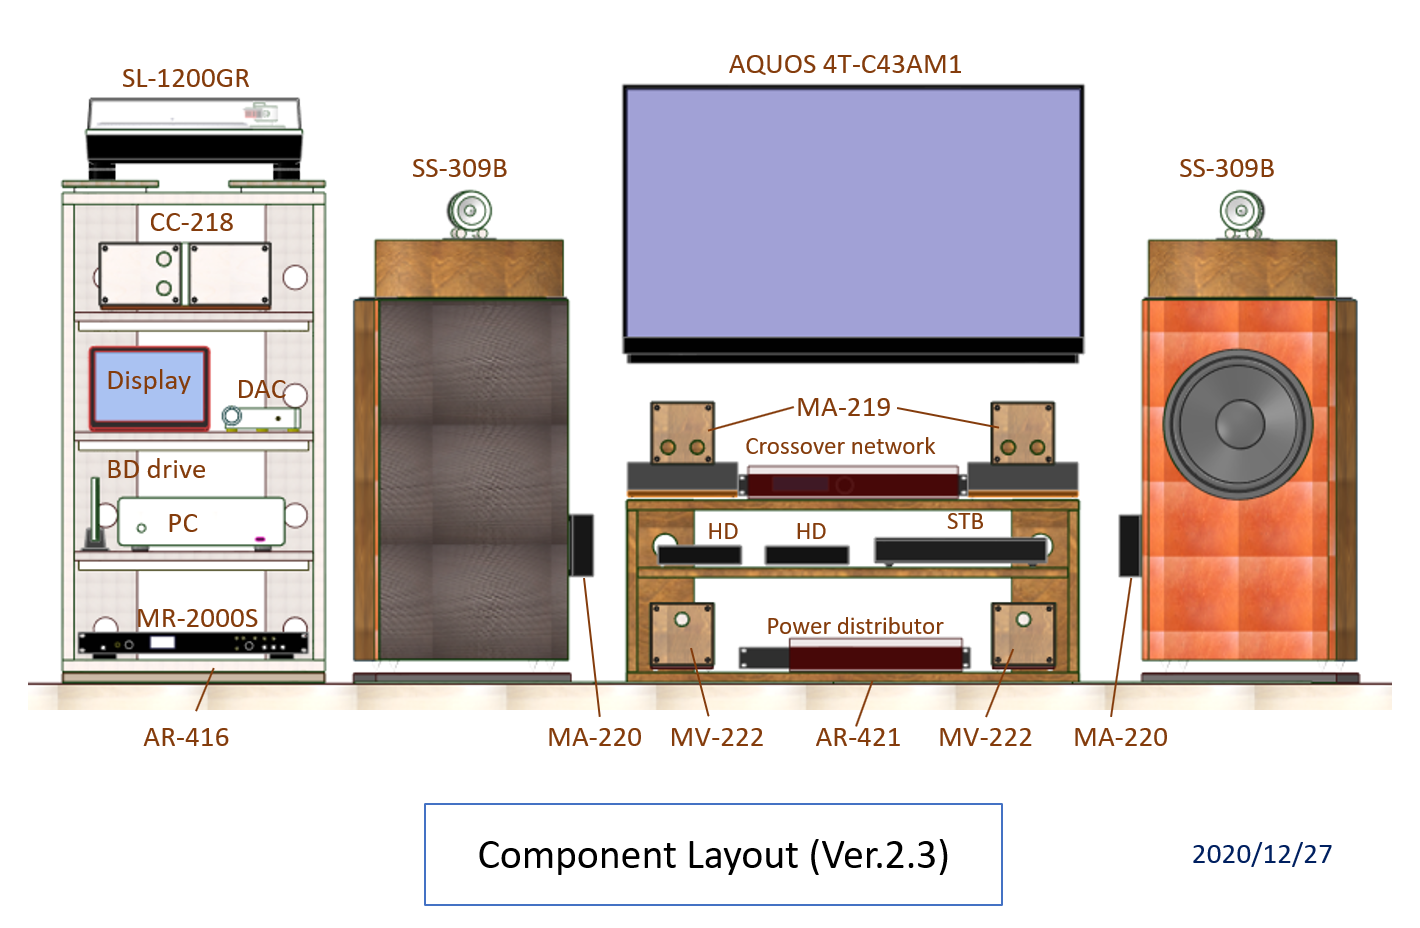 Component layout V2.3